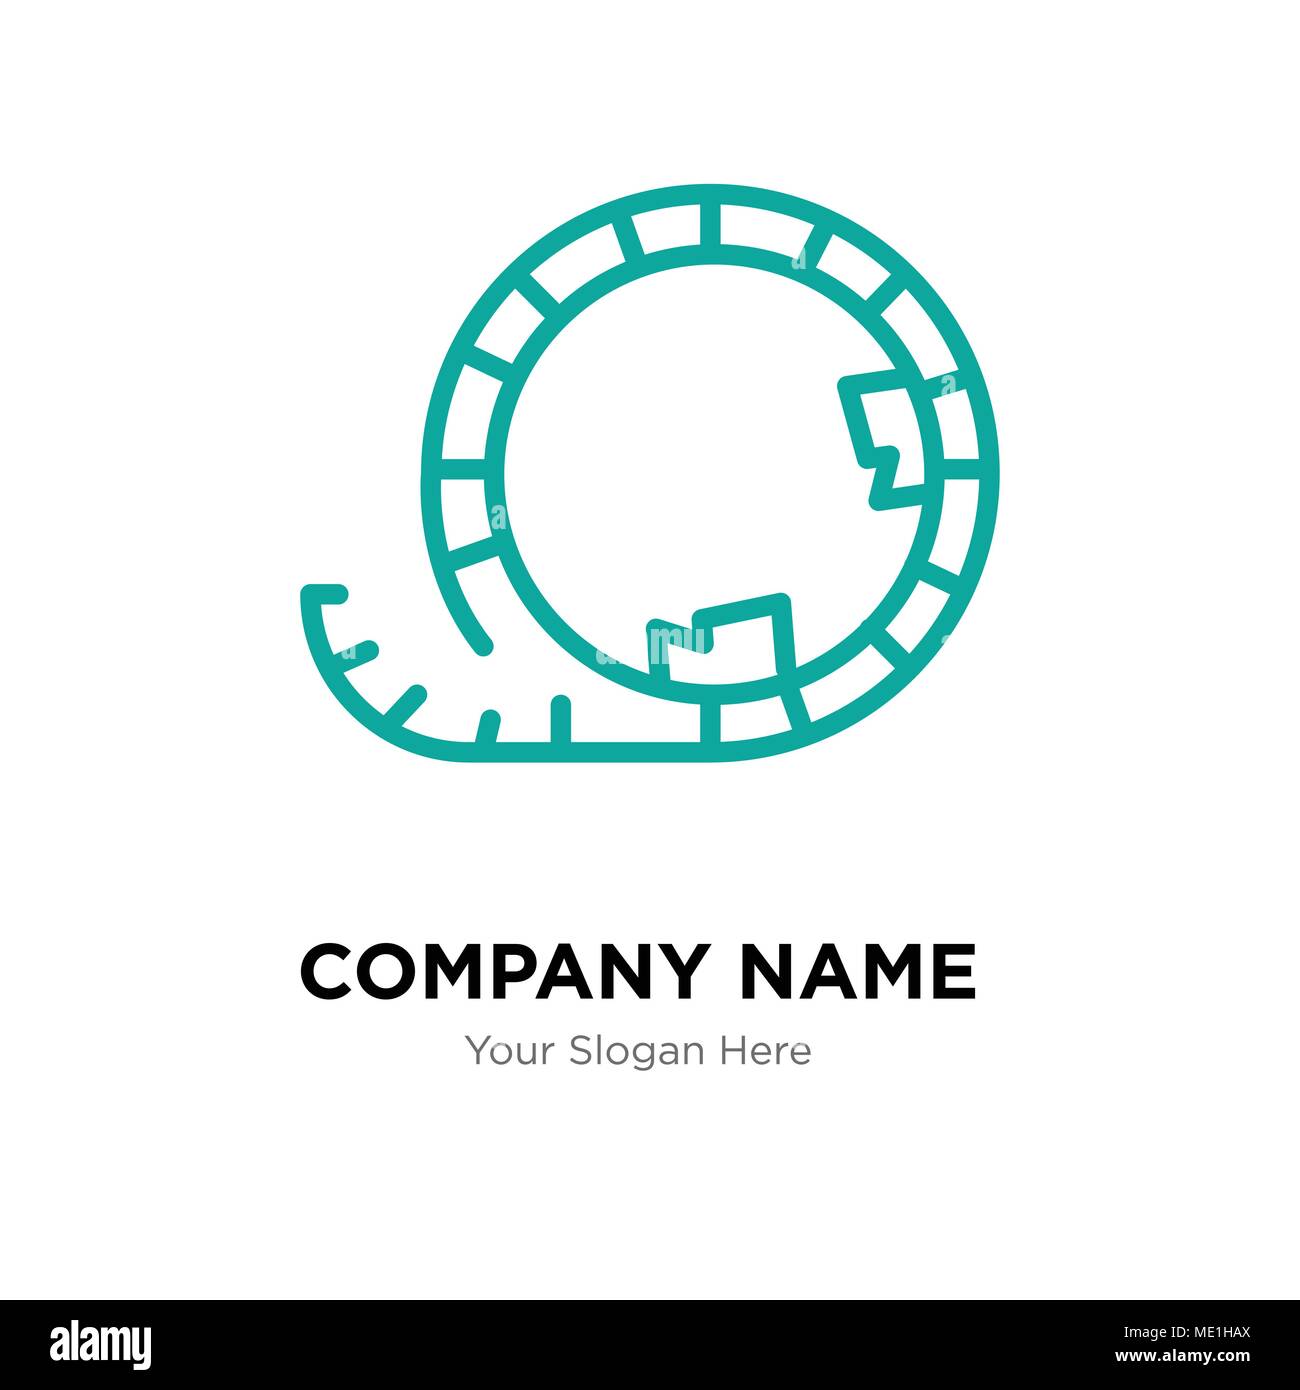 Roller coaster company logo design template, Business corporate vector icon  Stock Vector Image & Art - Alamy